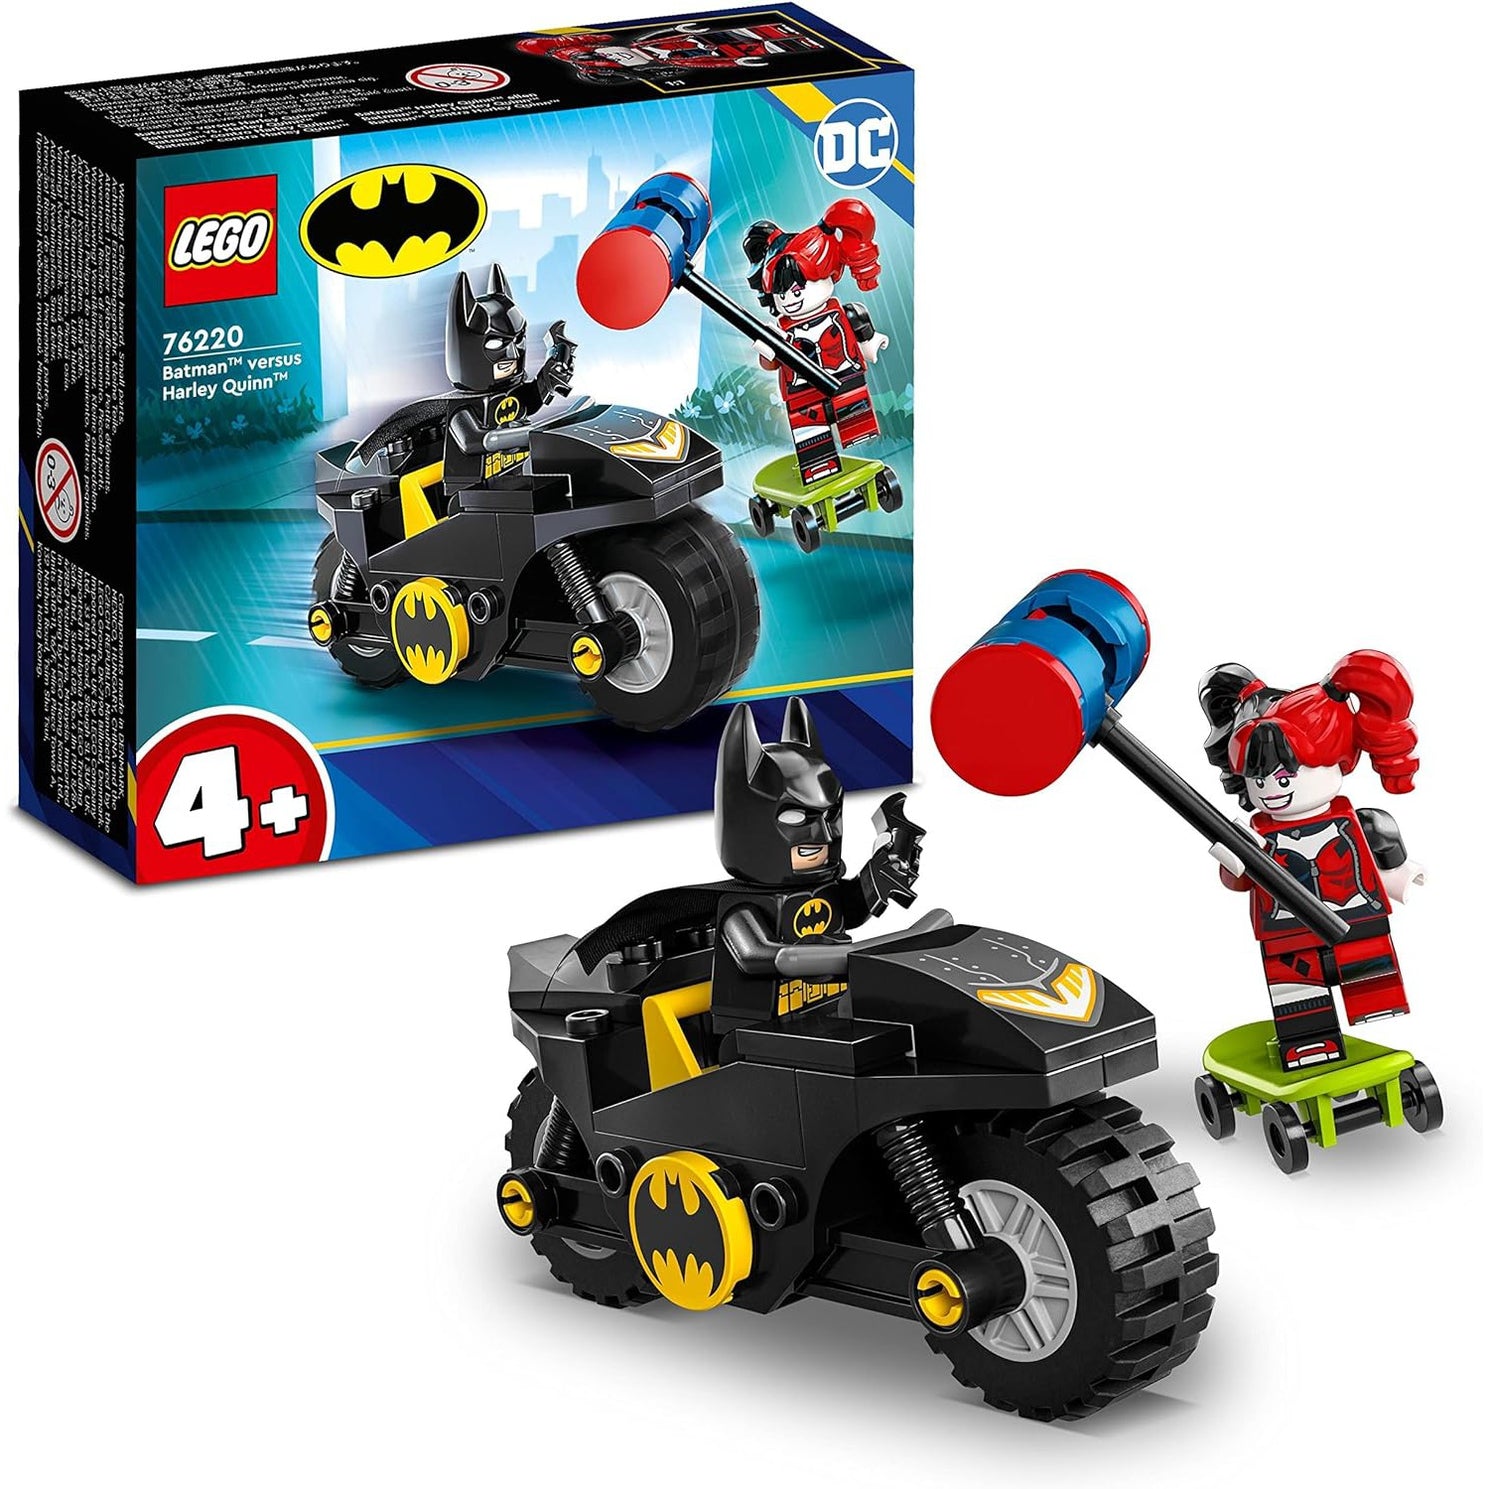 Lego 76220 Batman VS Harley Quinn